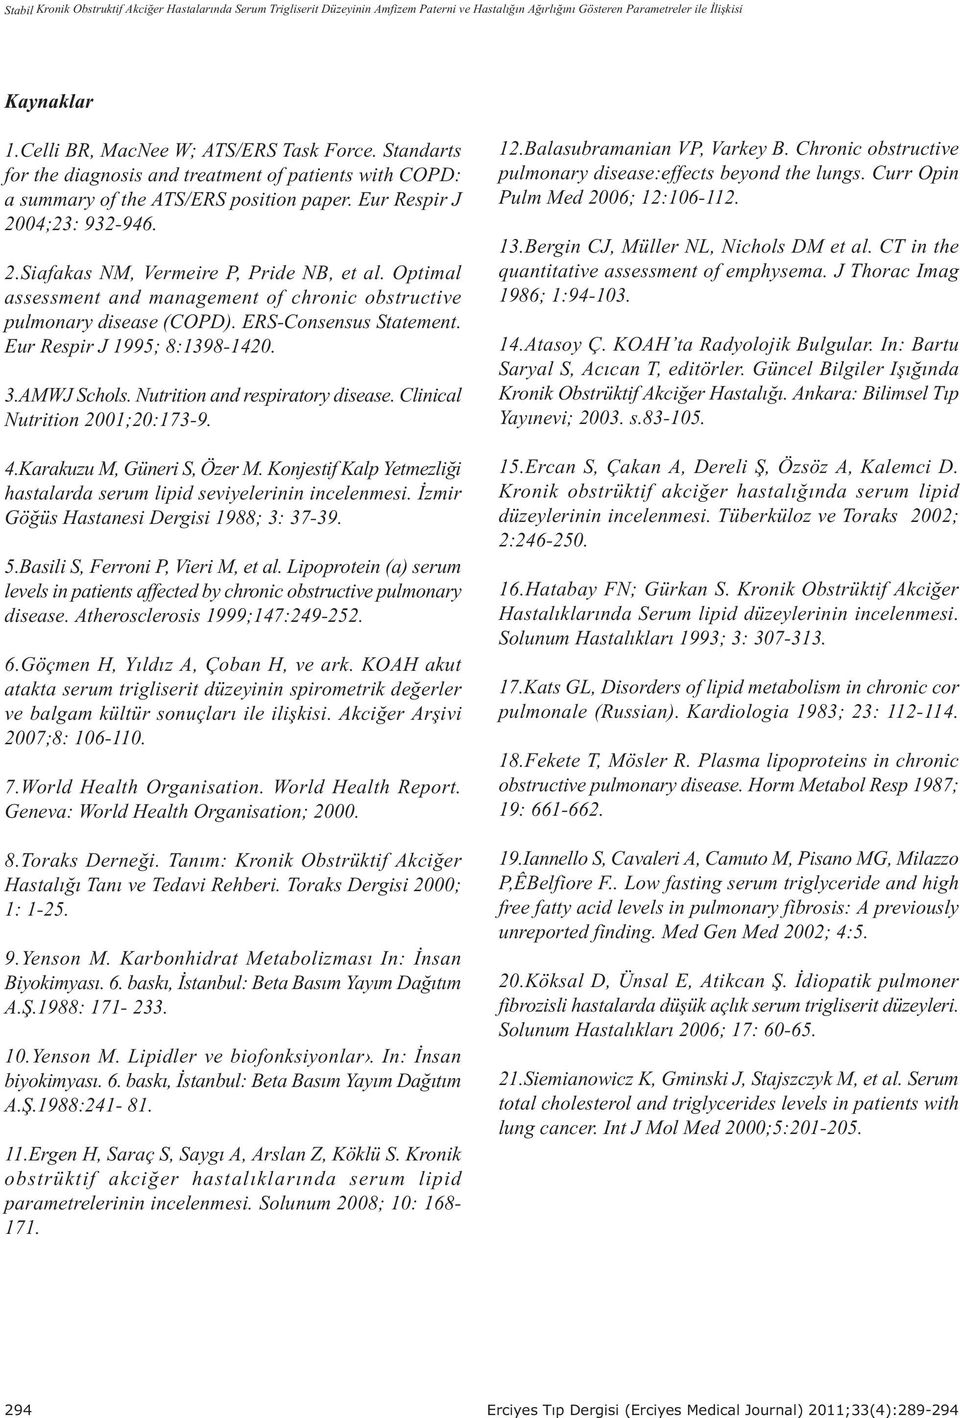 04;23: 932-946. 2.Siafakas NM, Vermeire P, Pride NB, et al. Optimal assessment and management of chronic obstructive pulmonary disease (COPD). ERS-Consensus Statement. Eur Respir J 1995; 8:1398-1420.